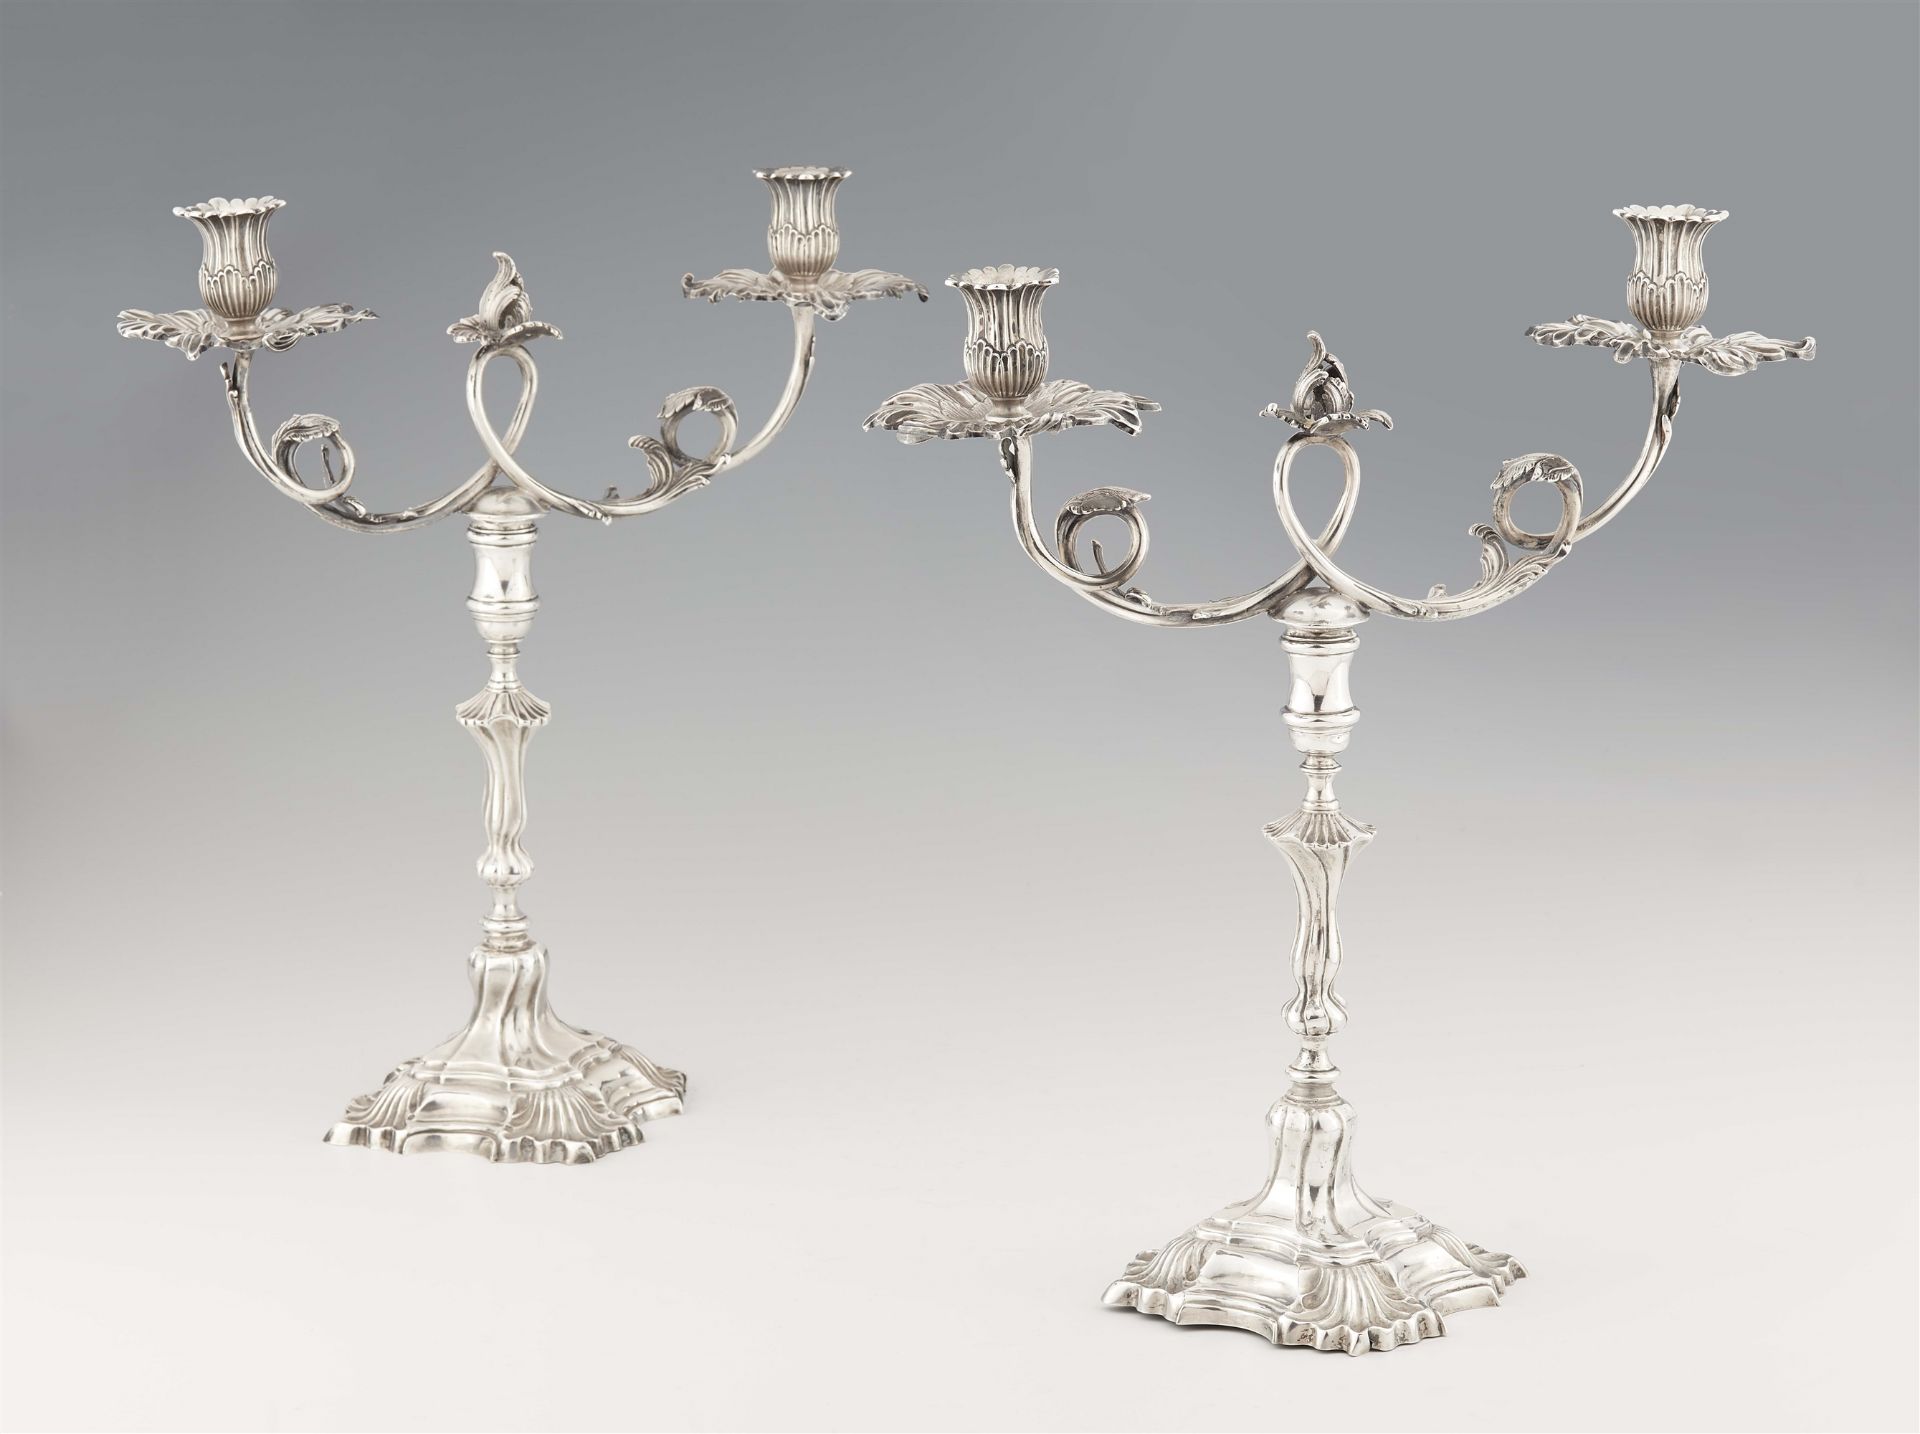 A pair of Riga silver candlesticks